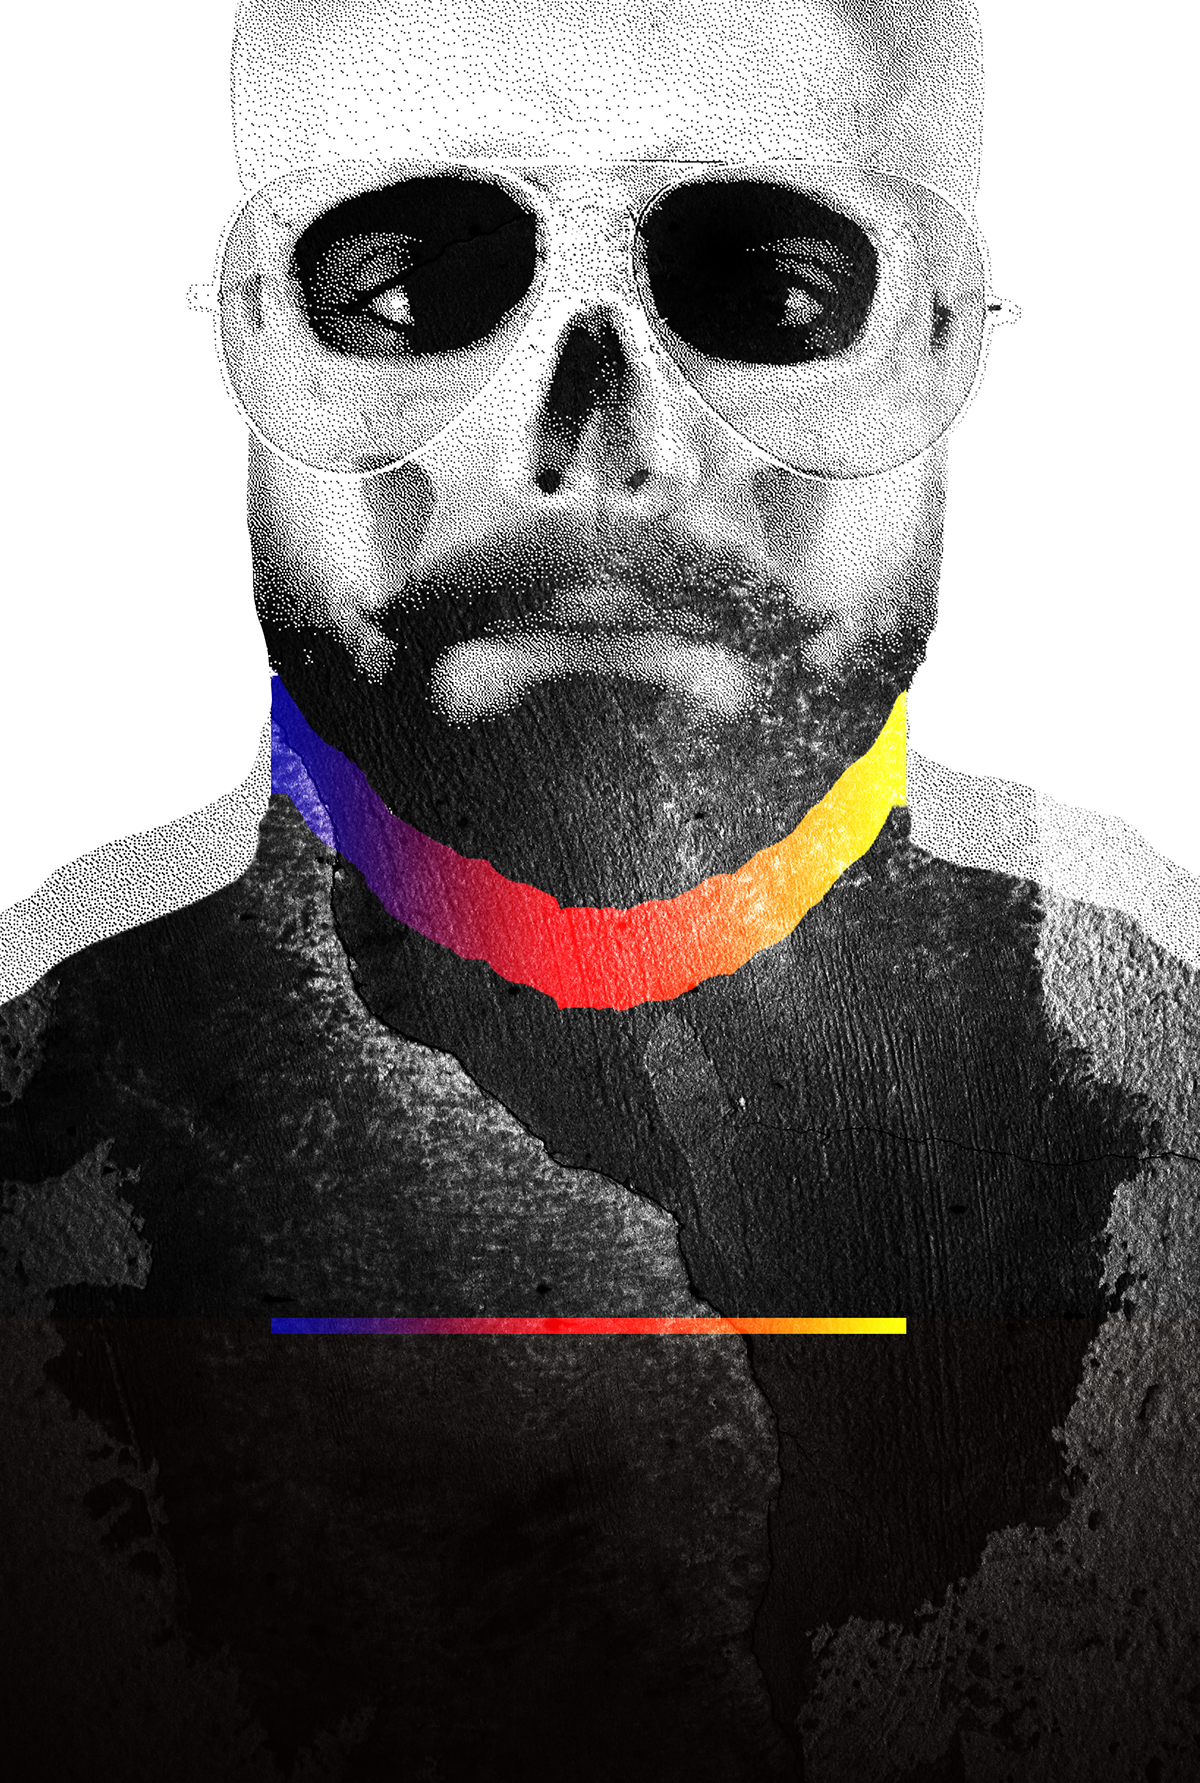 fight club poster Poster Design cairo egypt black and white weird skull self portrait bitmap mixed fizo